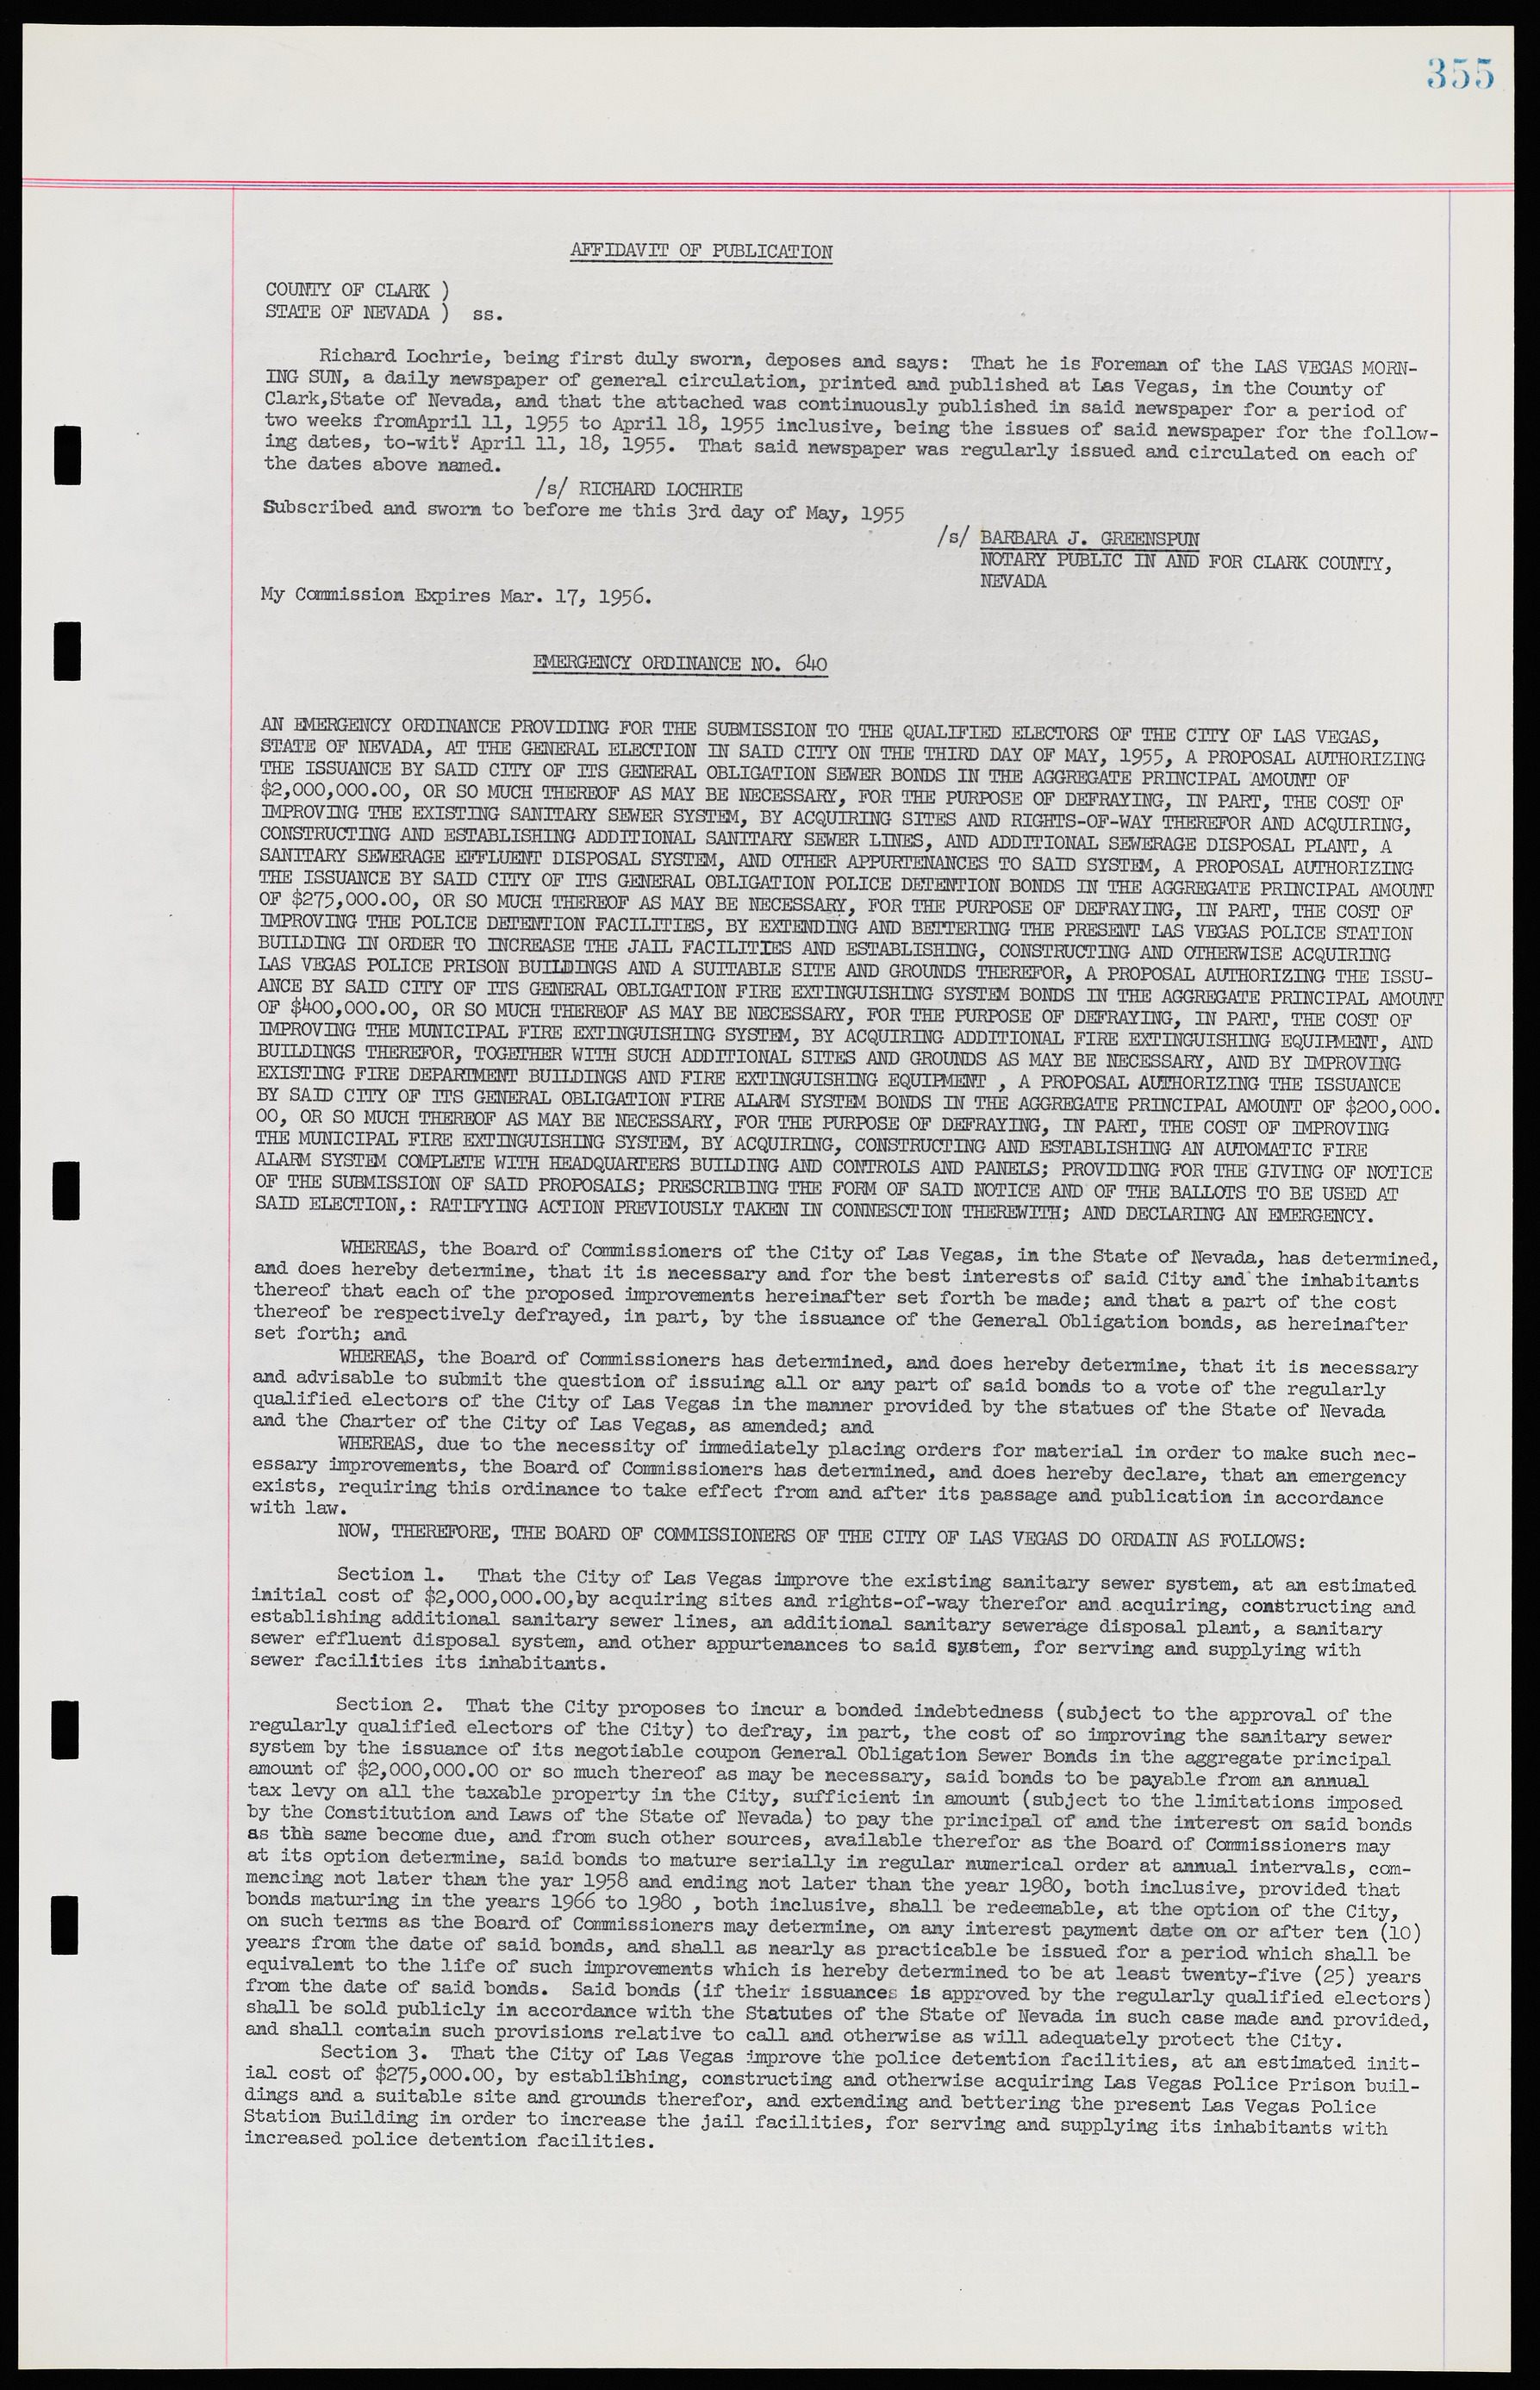 Las Vegas City Ordinances, November 13, 1950 to August 6, 1958, lvc000015-363